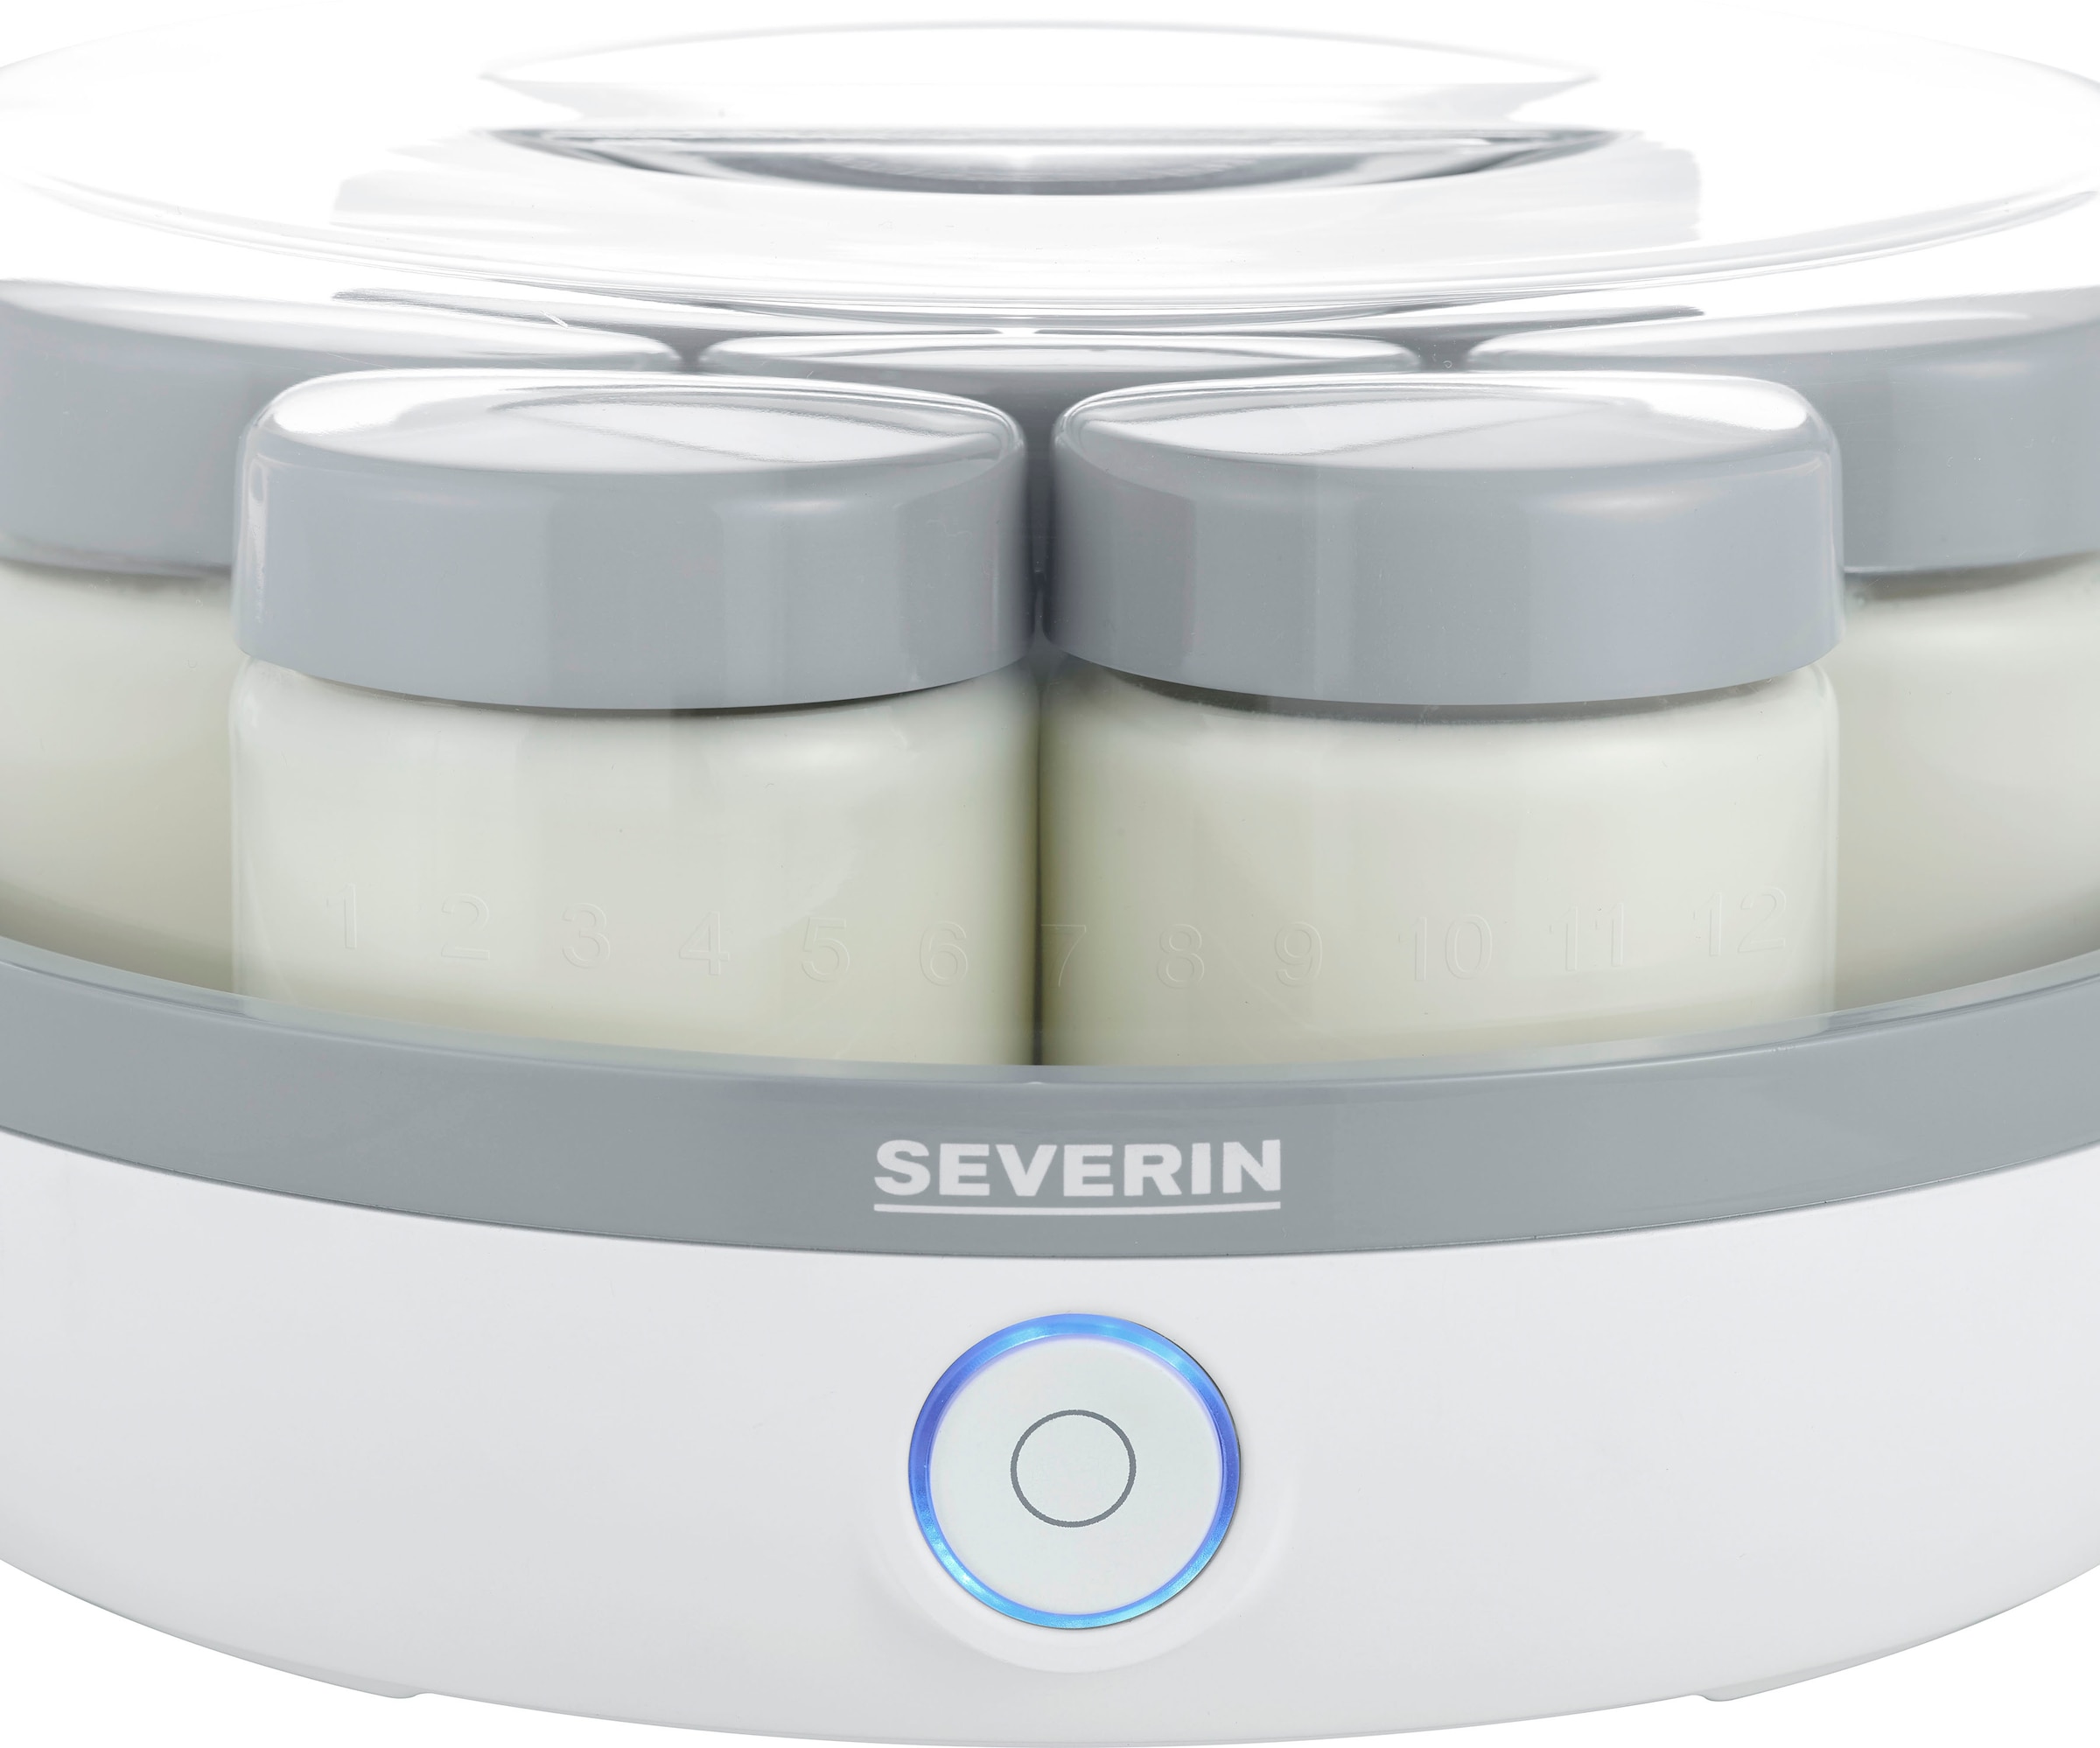 Severin Joghurtbereiter »JG 3520«, 14 Portionsbehälter, je 150 ml, 14 auslaufsichere Portionsgläser, transparenter Deckel